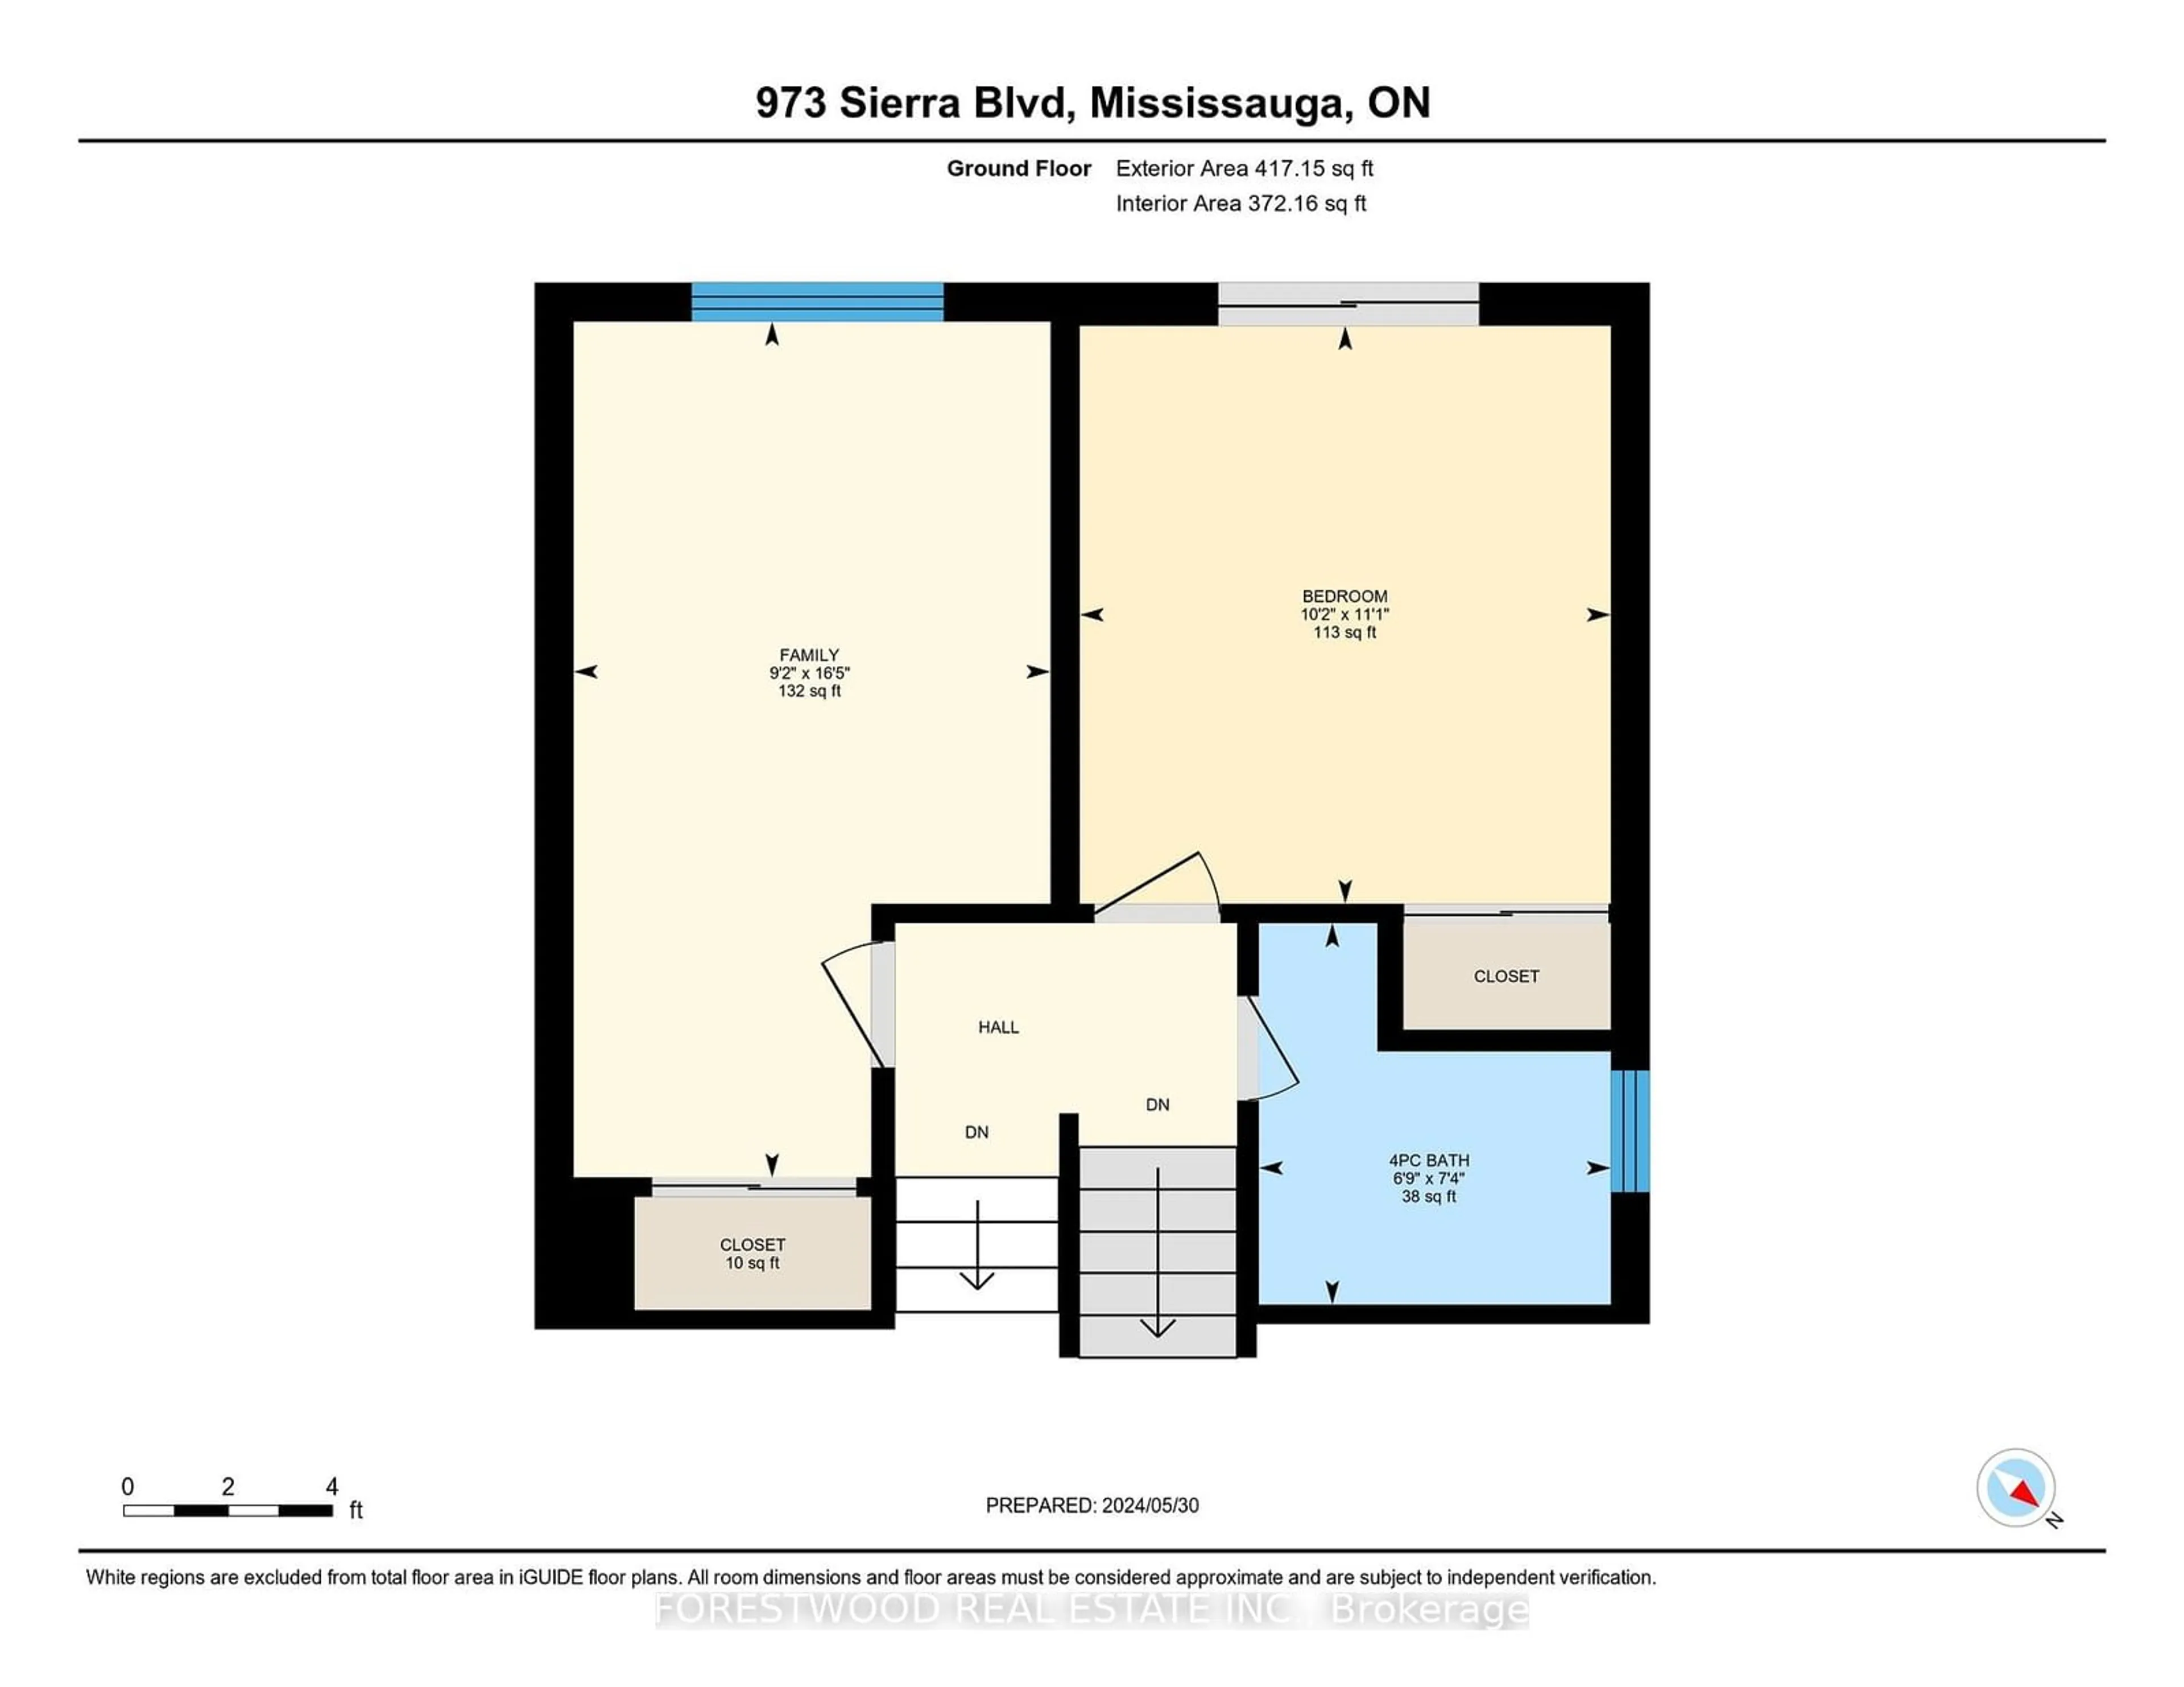 Floor plan for 973 Sierra Blvd, Mississauga Ontario L4Y 2E3